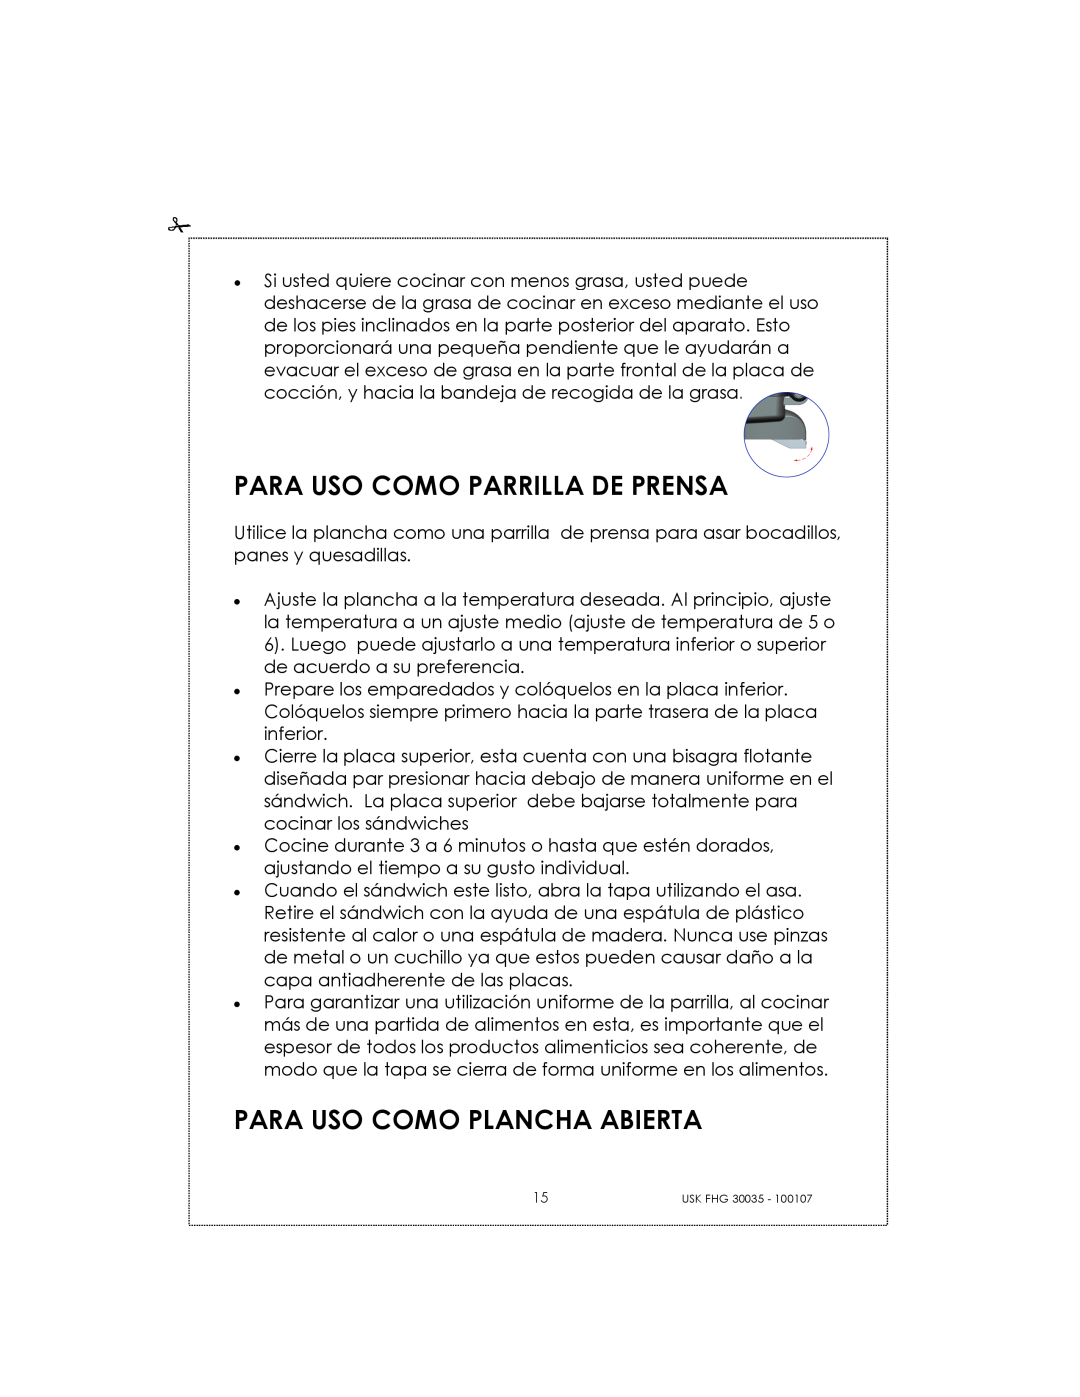 Kalorik 30035, 31025 manual Para Uso Como Parrilla De Prensa, Para Uso Como Plancha Abierta 